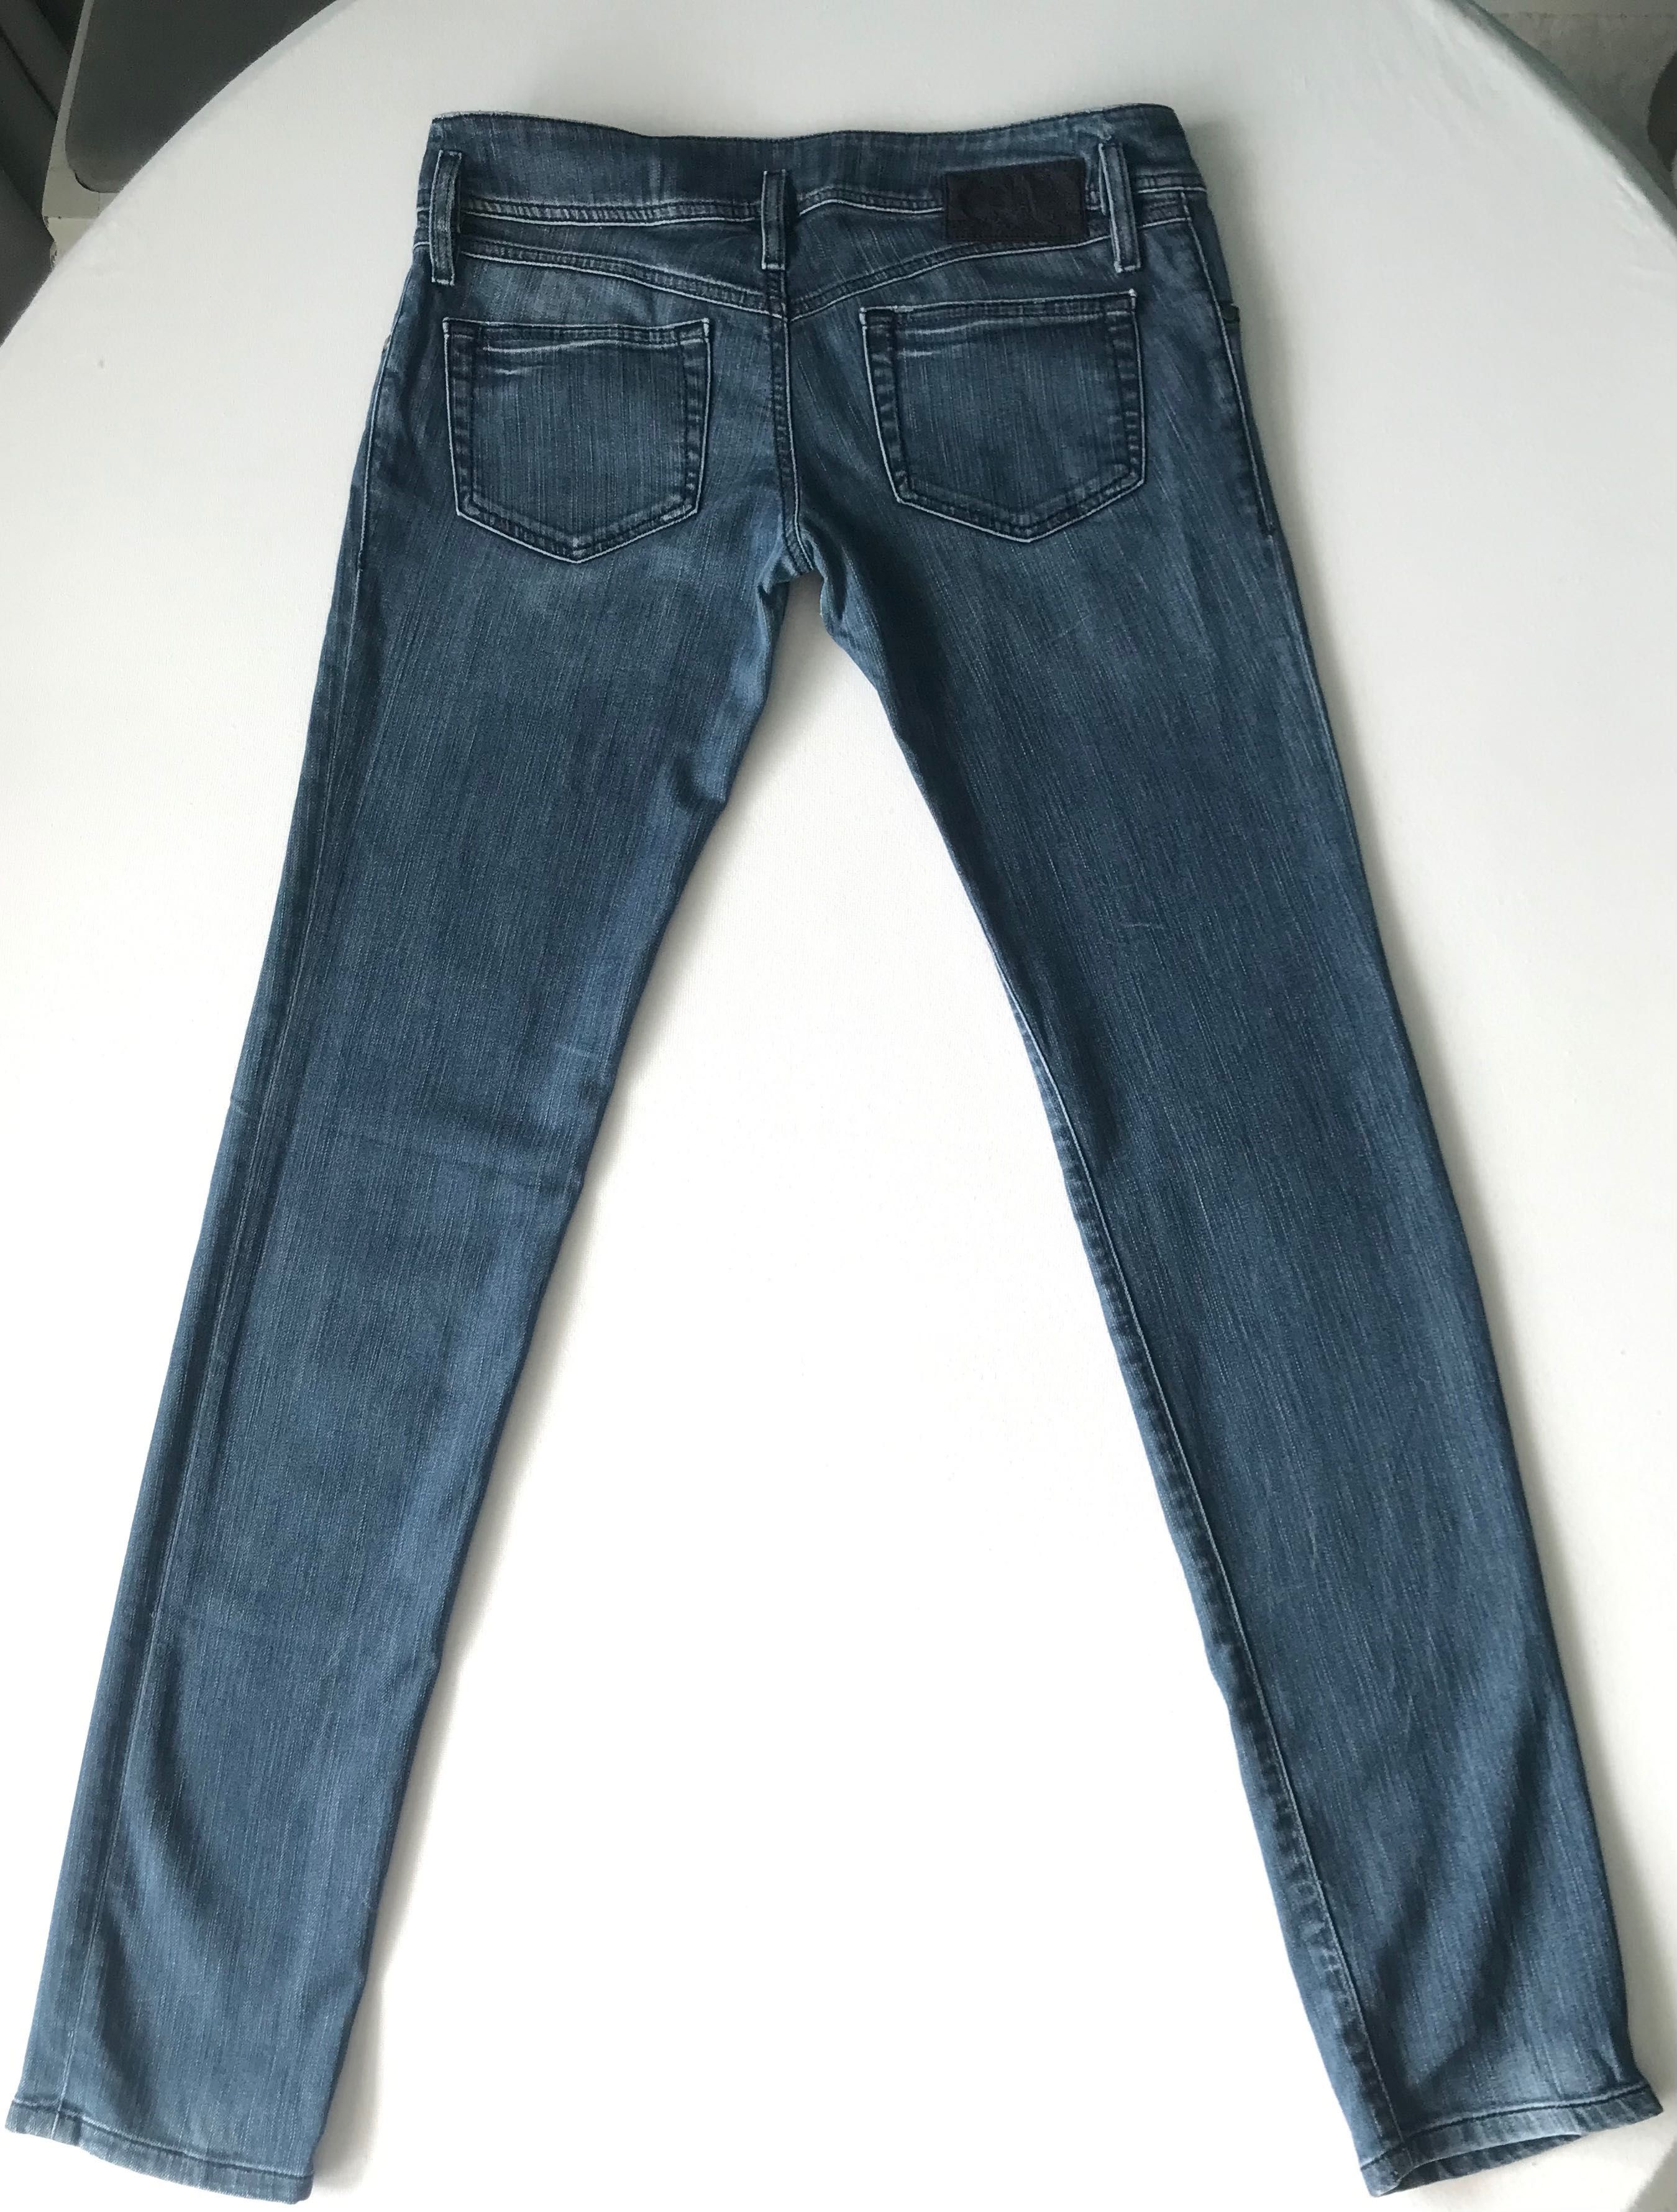 Spodnie jeans Diesel Matic Stretch Jeans W30 L34 M